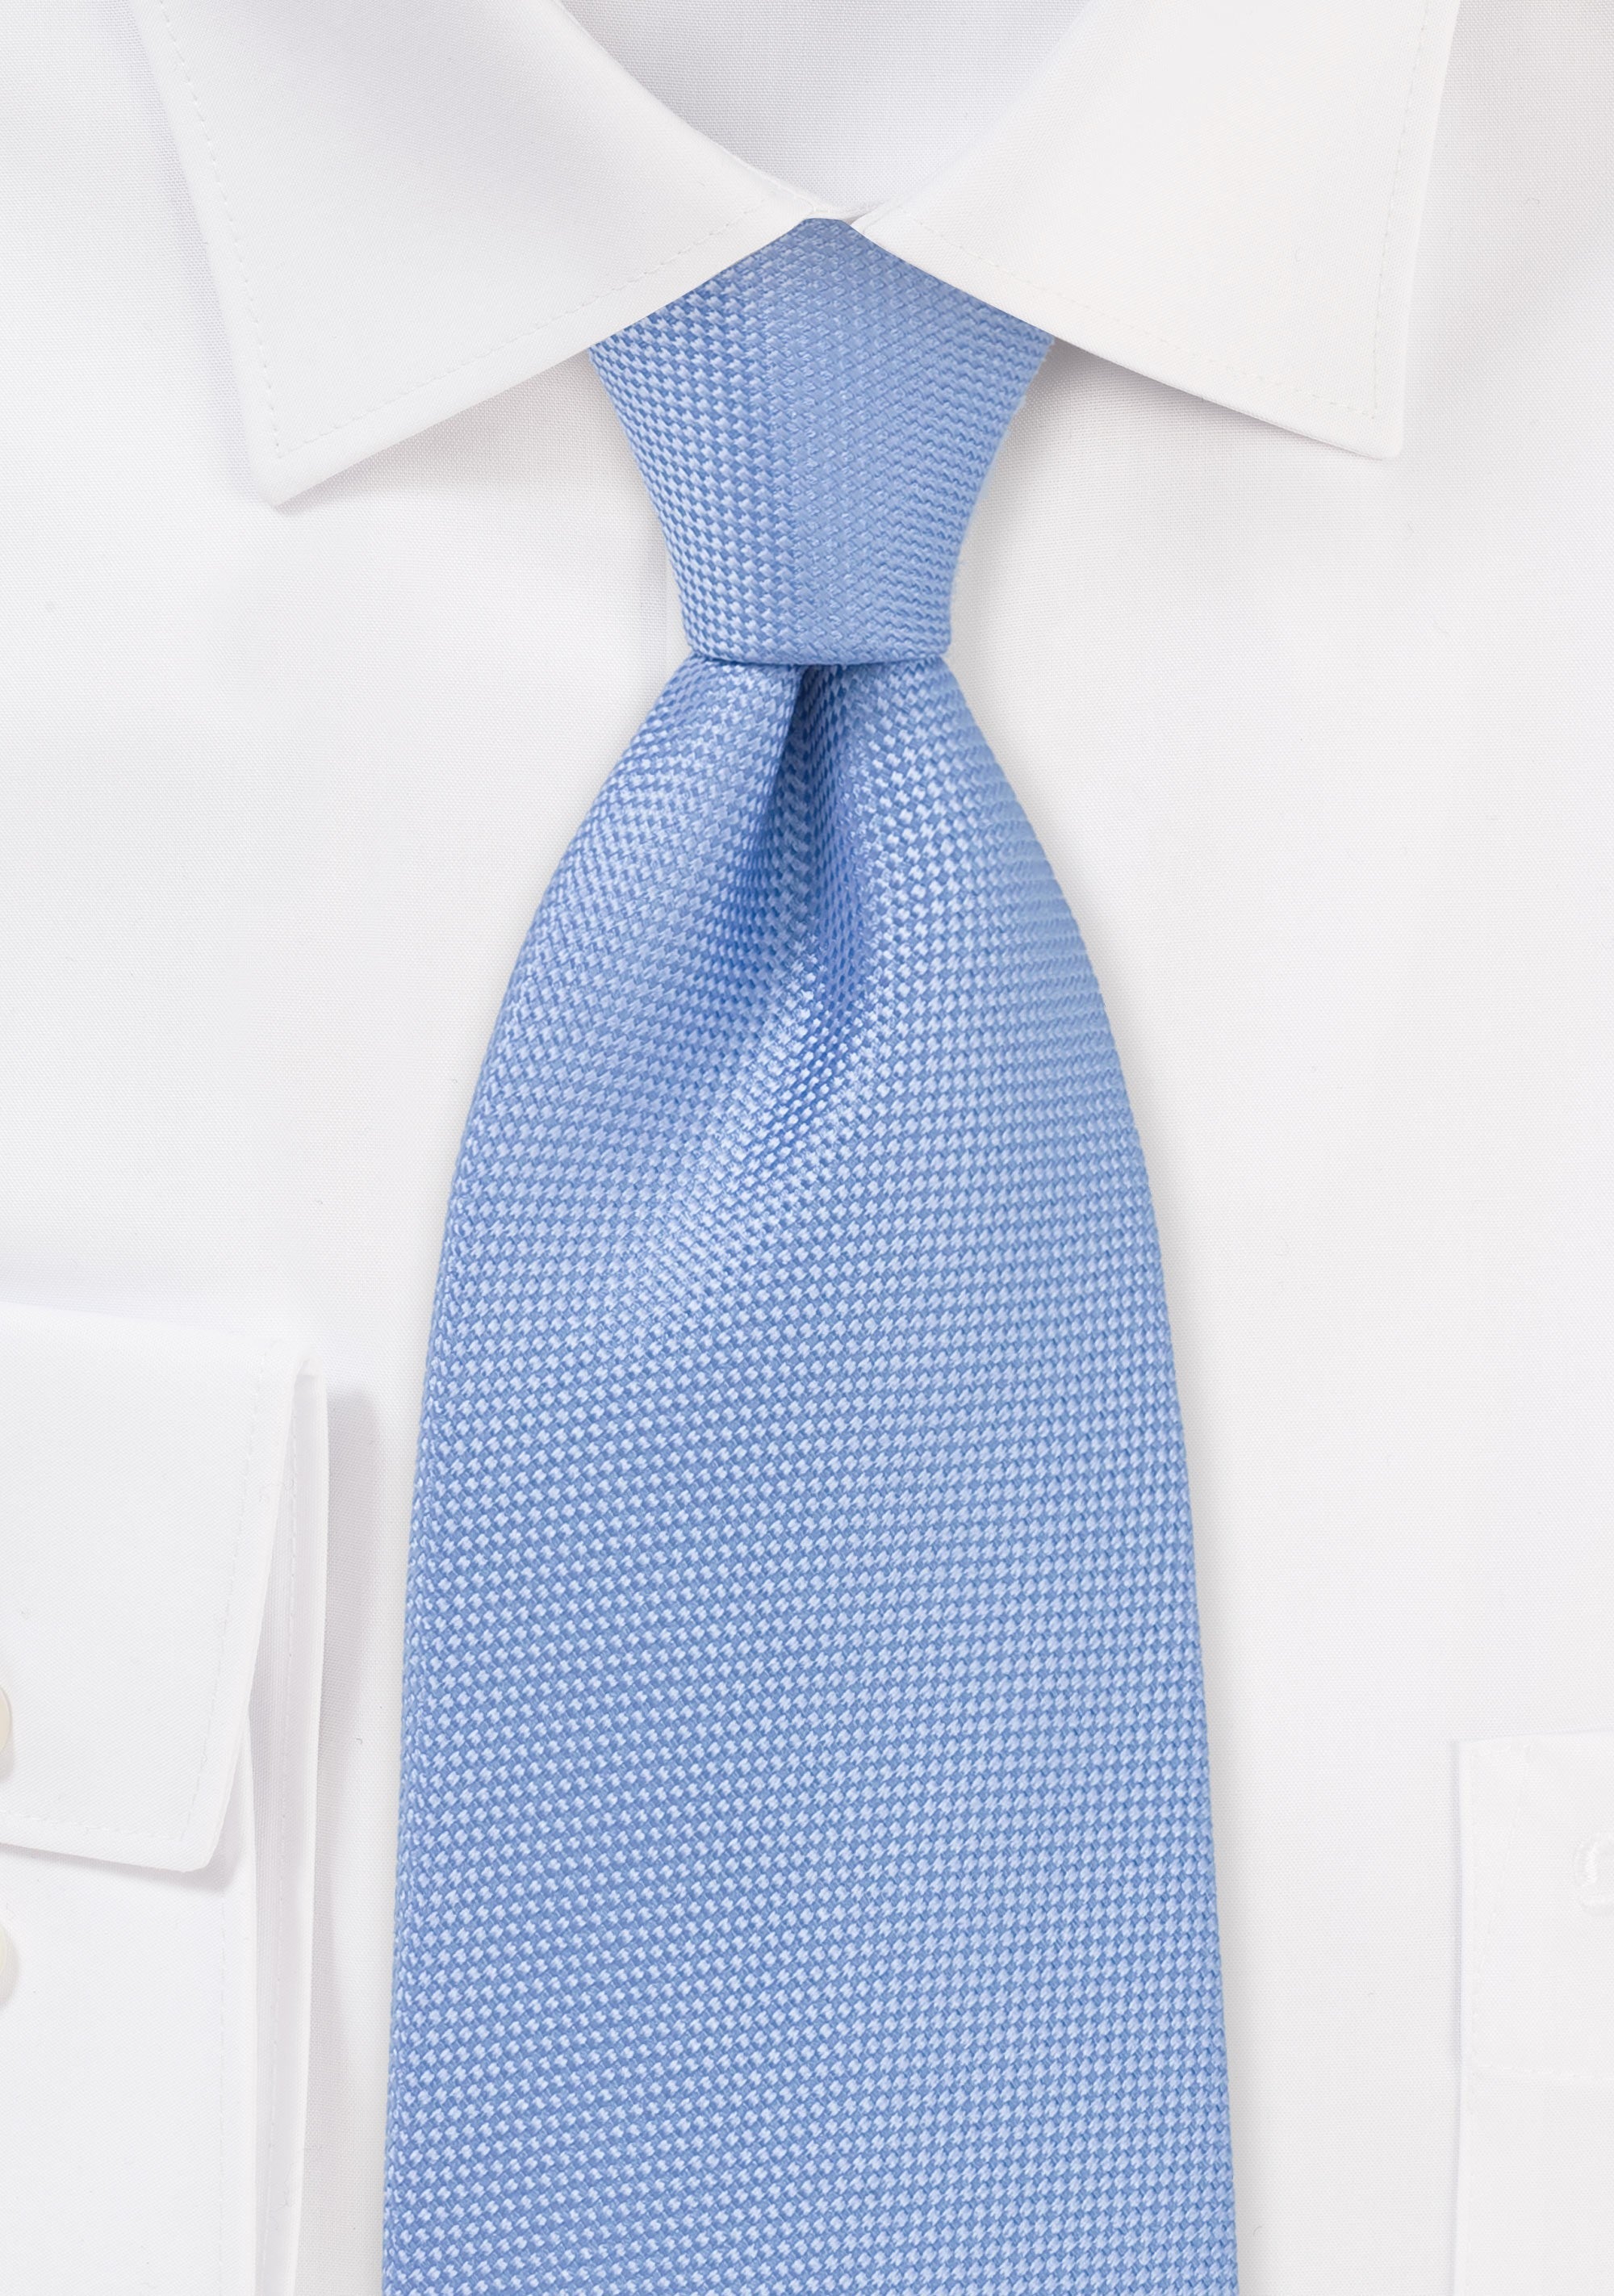 Sky Blue MicroTexture Necktie